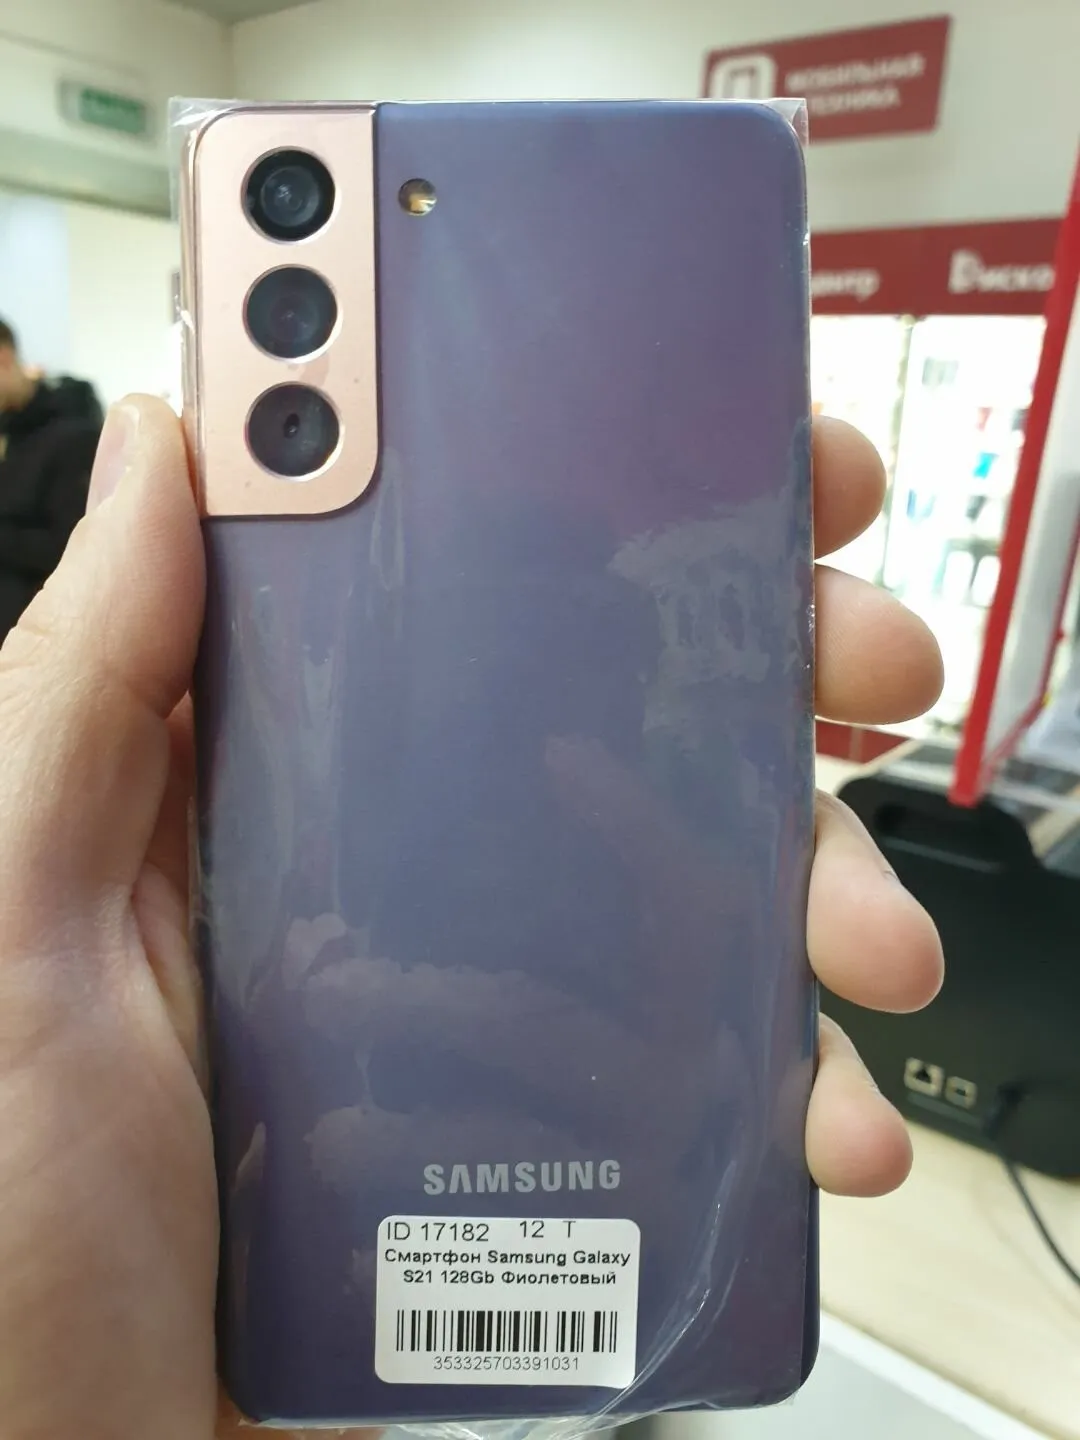 Samsung Galaxy S21 5G (SM-G991B) 8/128 GB, binafsharang fantom#2